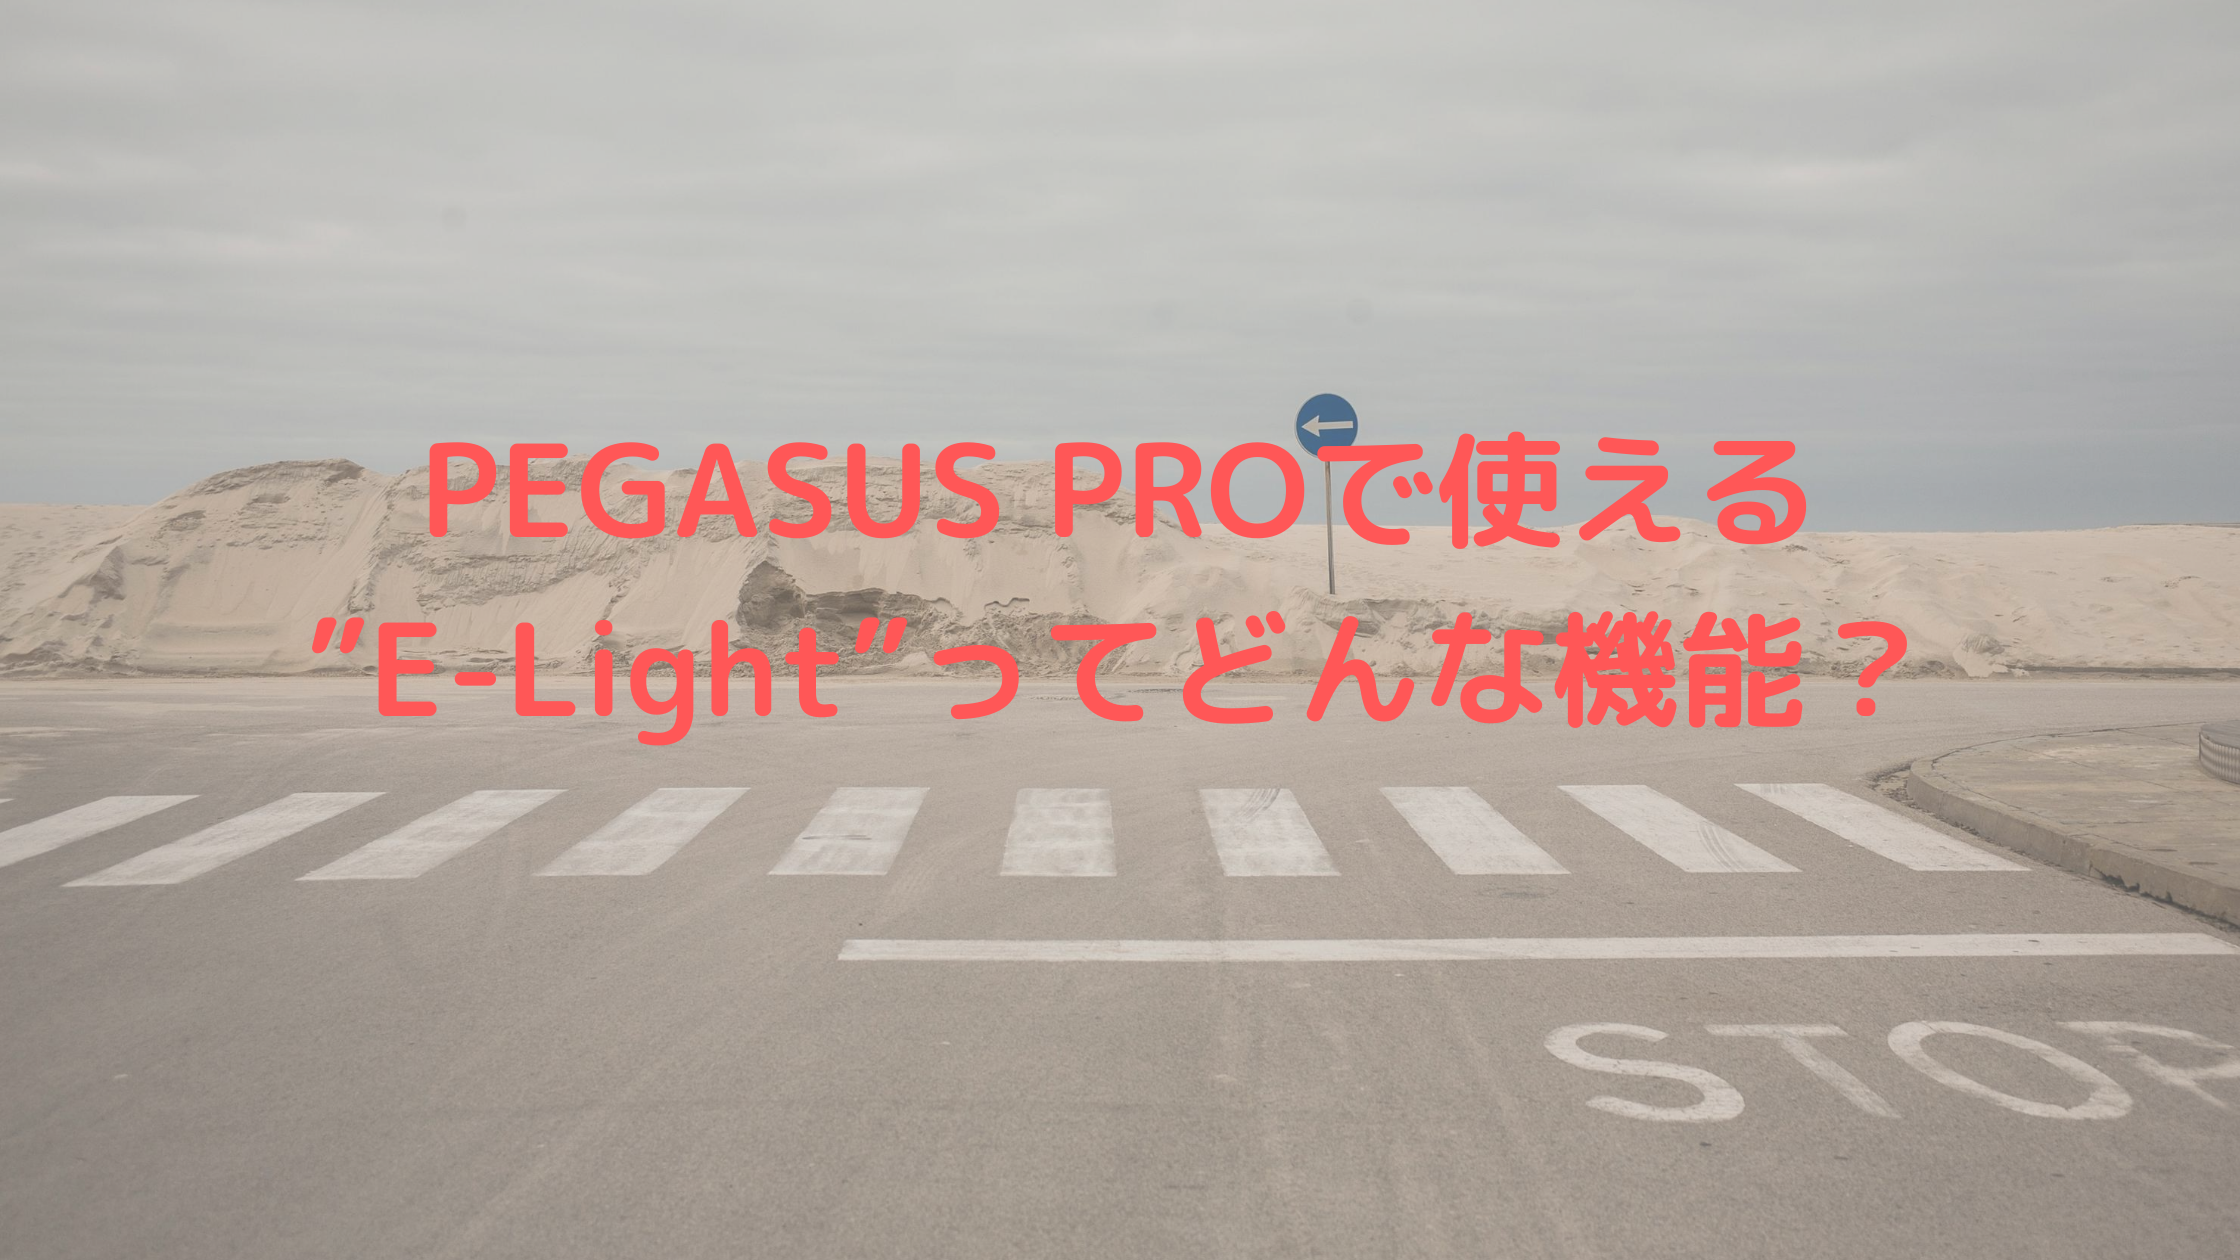 PEGASUS PROで使える”E-Light”ってどんな機能？